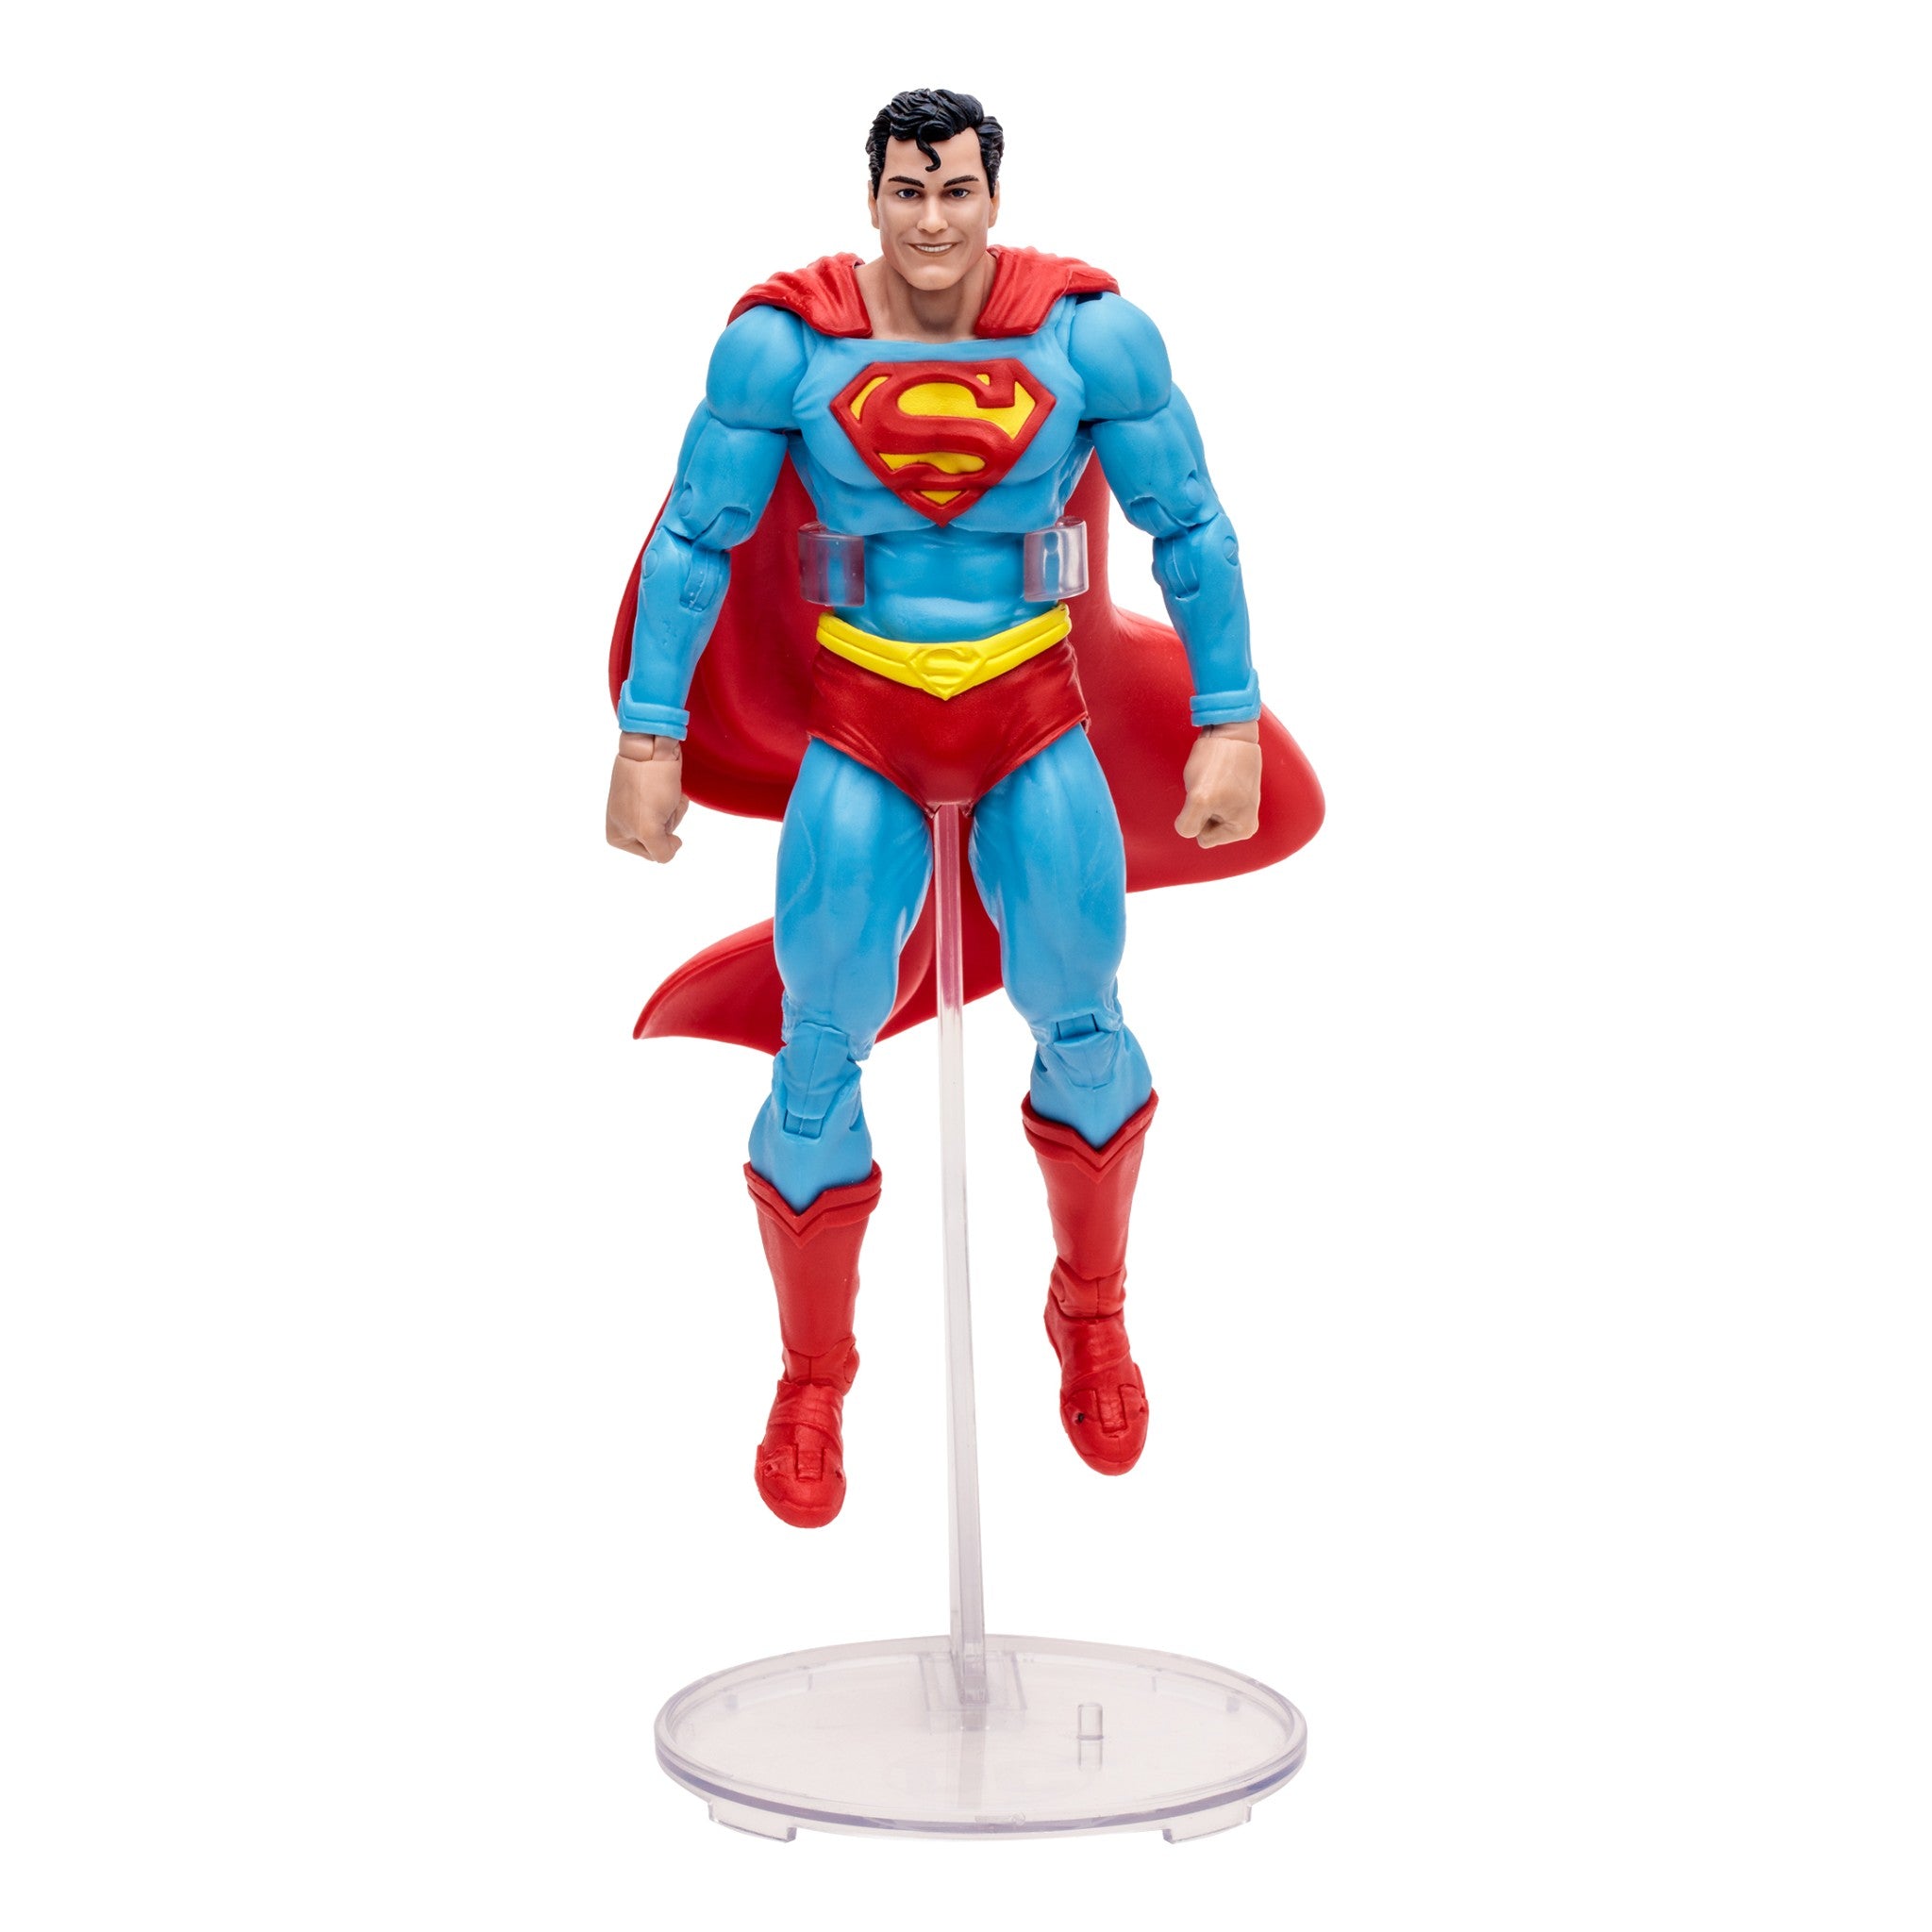 DC Multiverse DC Classic Superman - McFarlane Toys